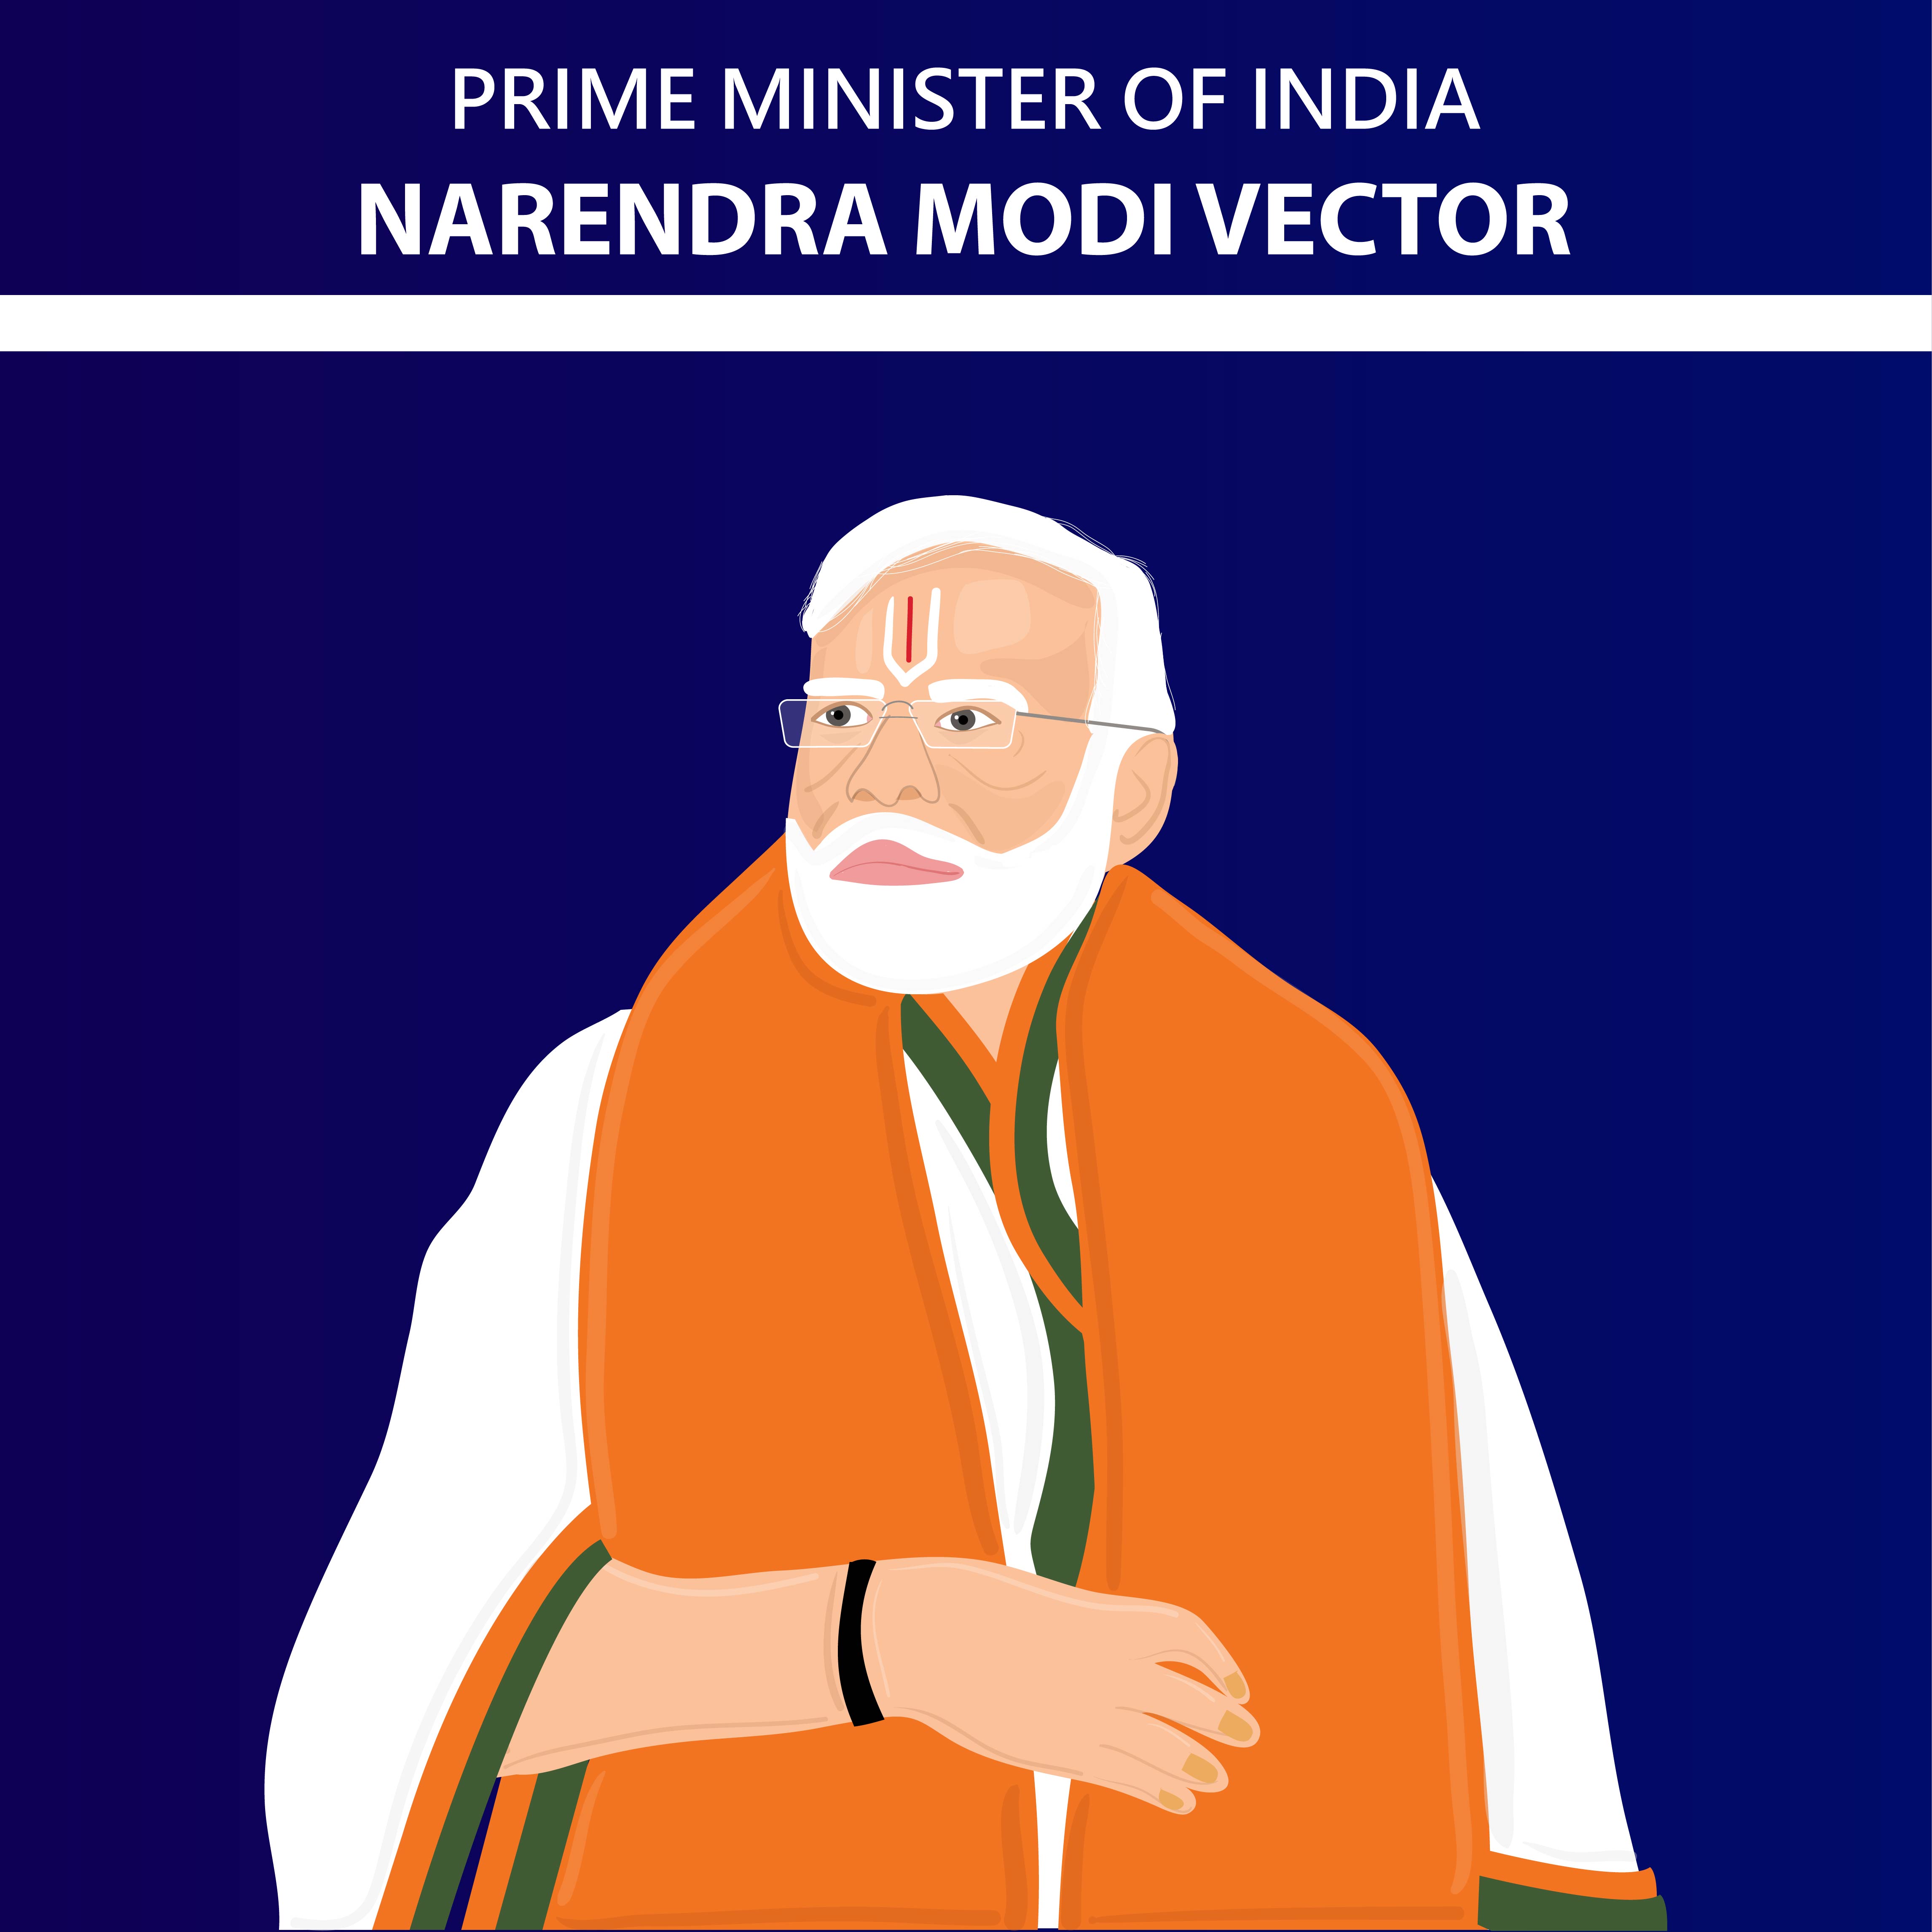 Prime Minister of India Shri Narendra Modi Vector cover image.